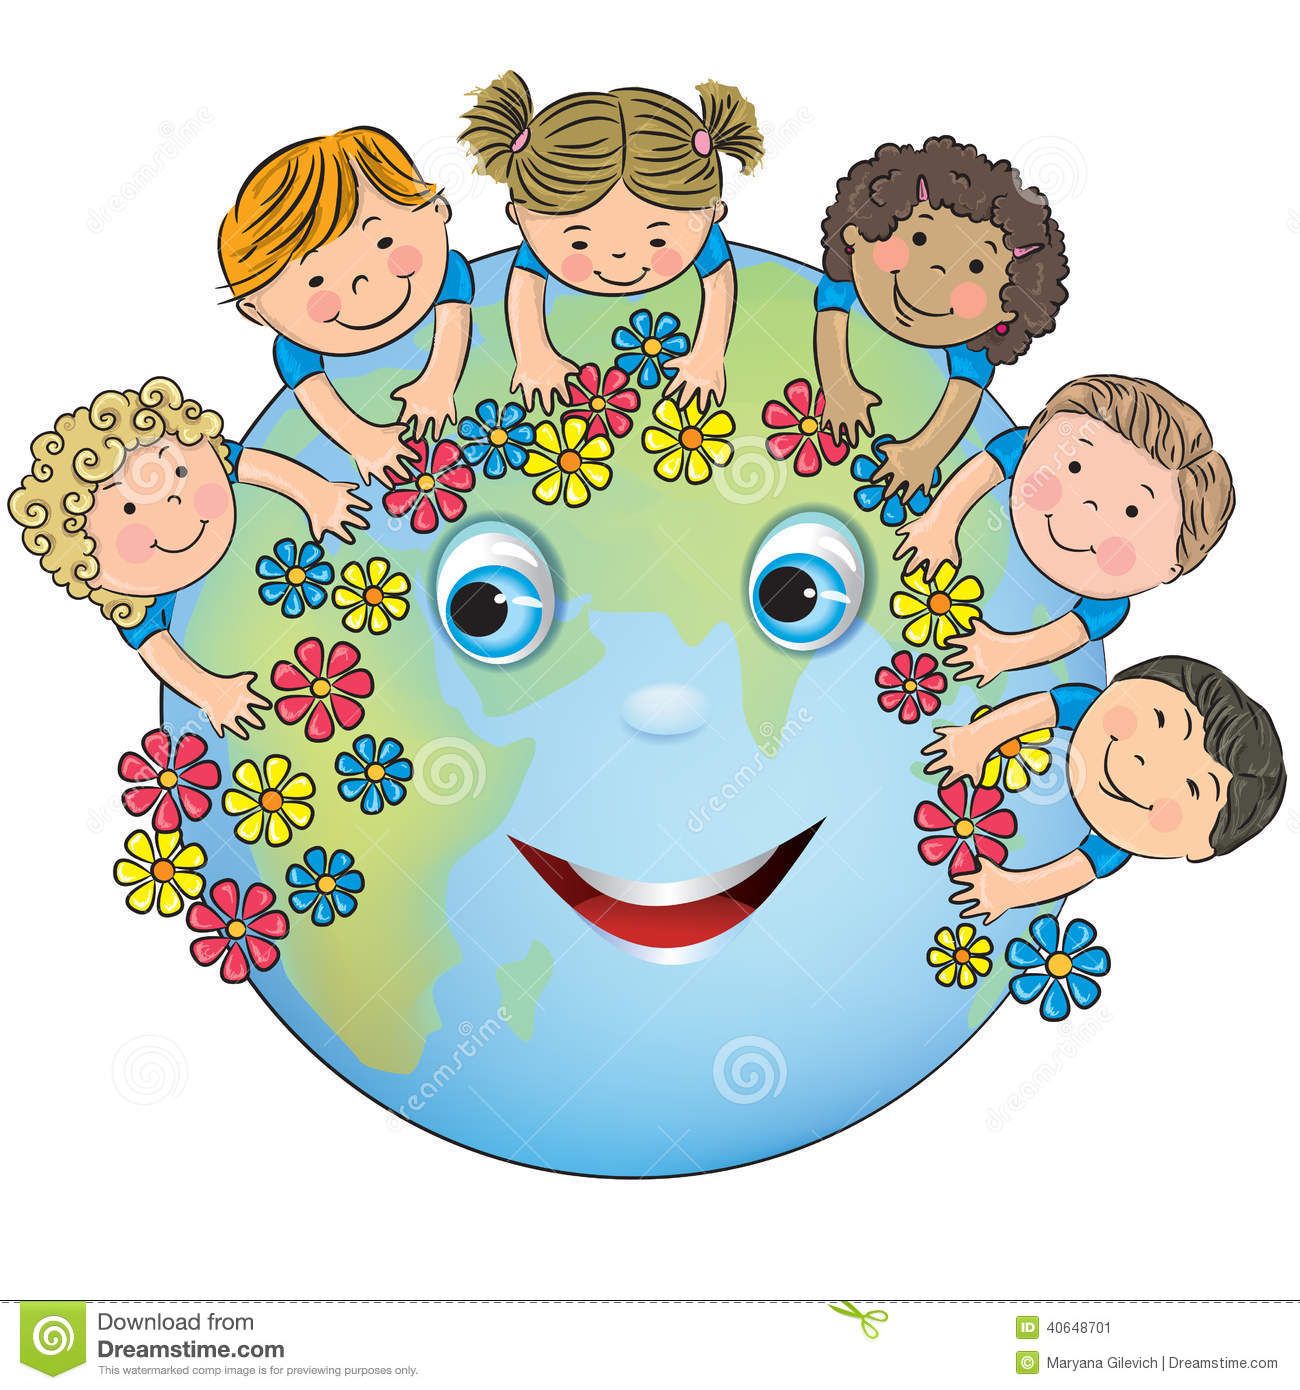 Children hugging planet.